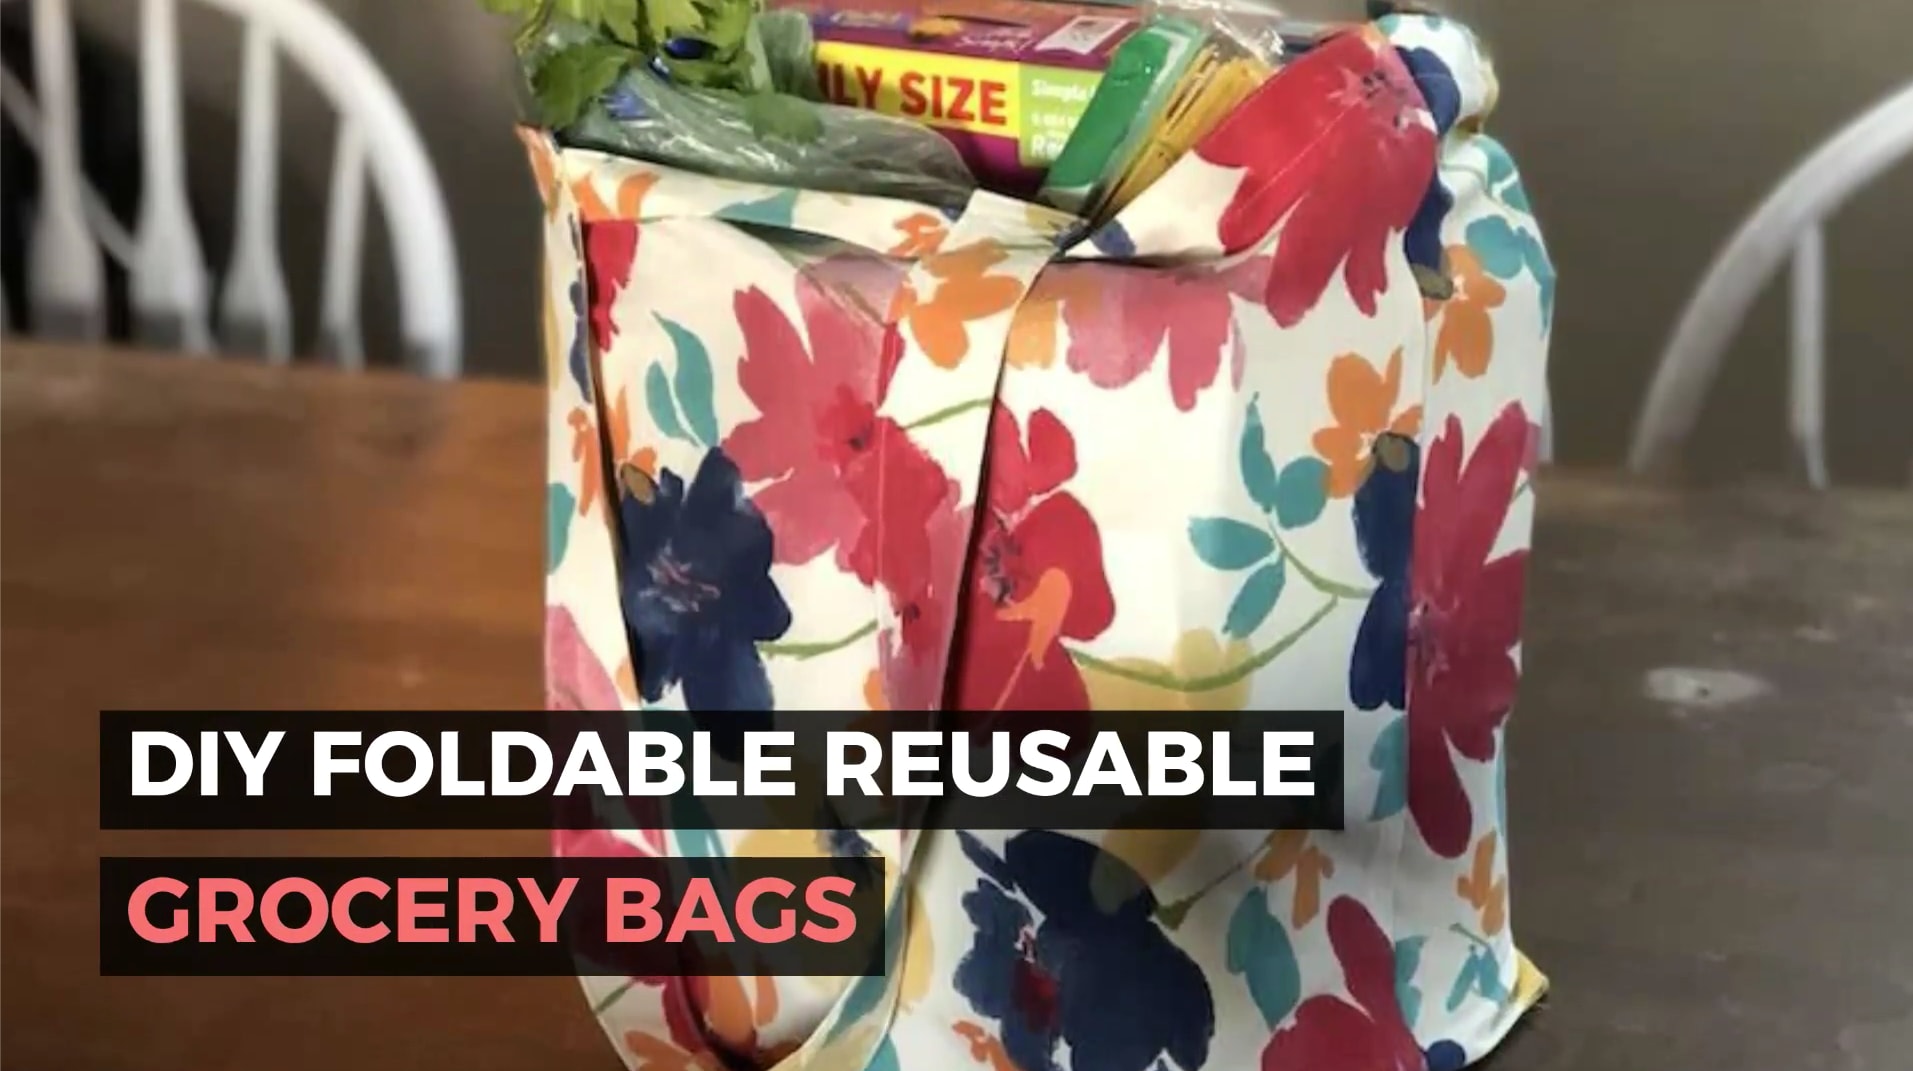 DIY eco shopping bag Tutorial  How to Make foldable grocery bag 